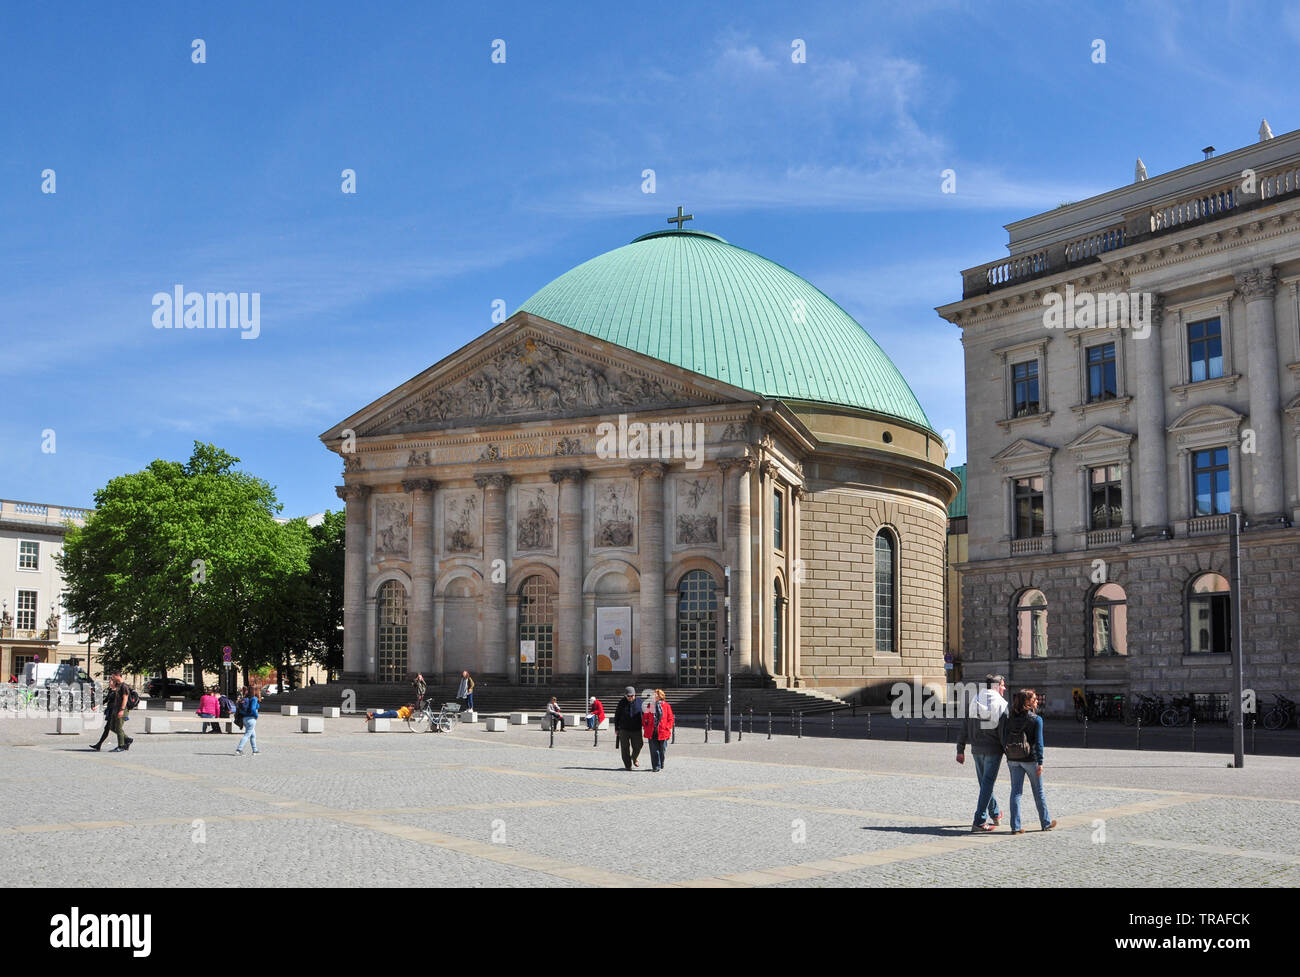 St Hedwig's Cathedral, Bebelplatz, Berlin, Germany, Europe Stock Photo